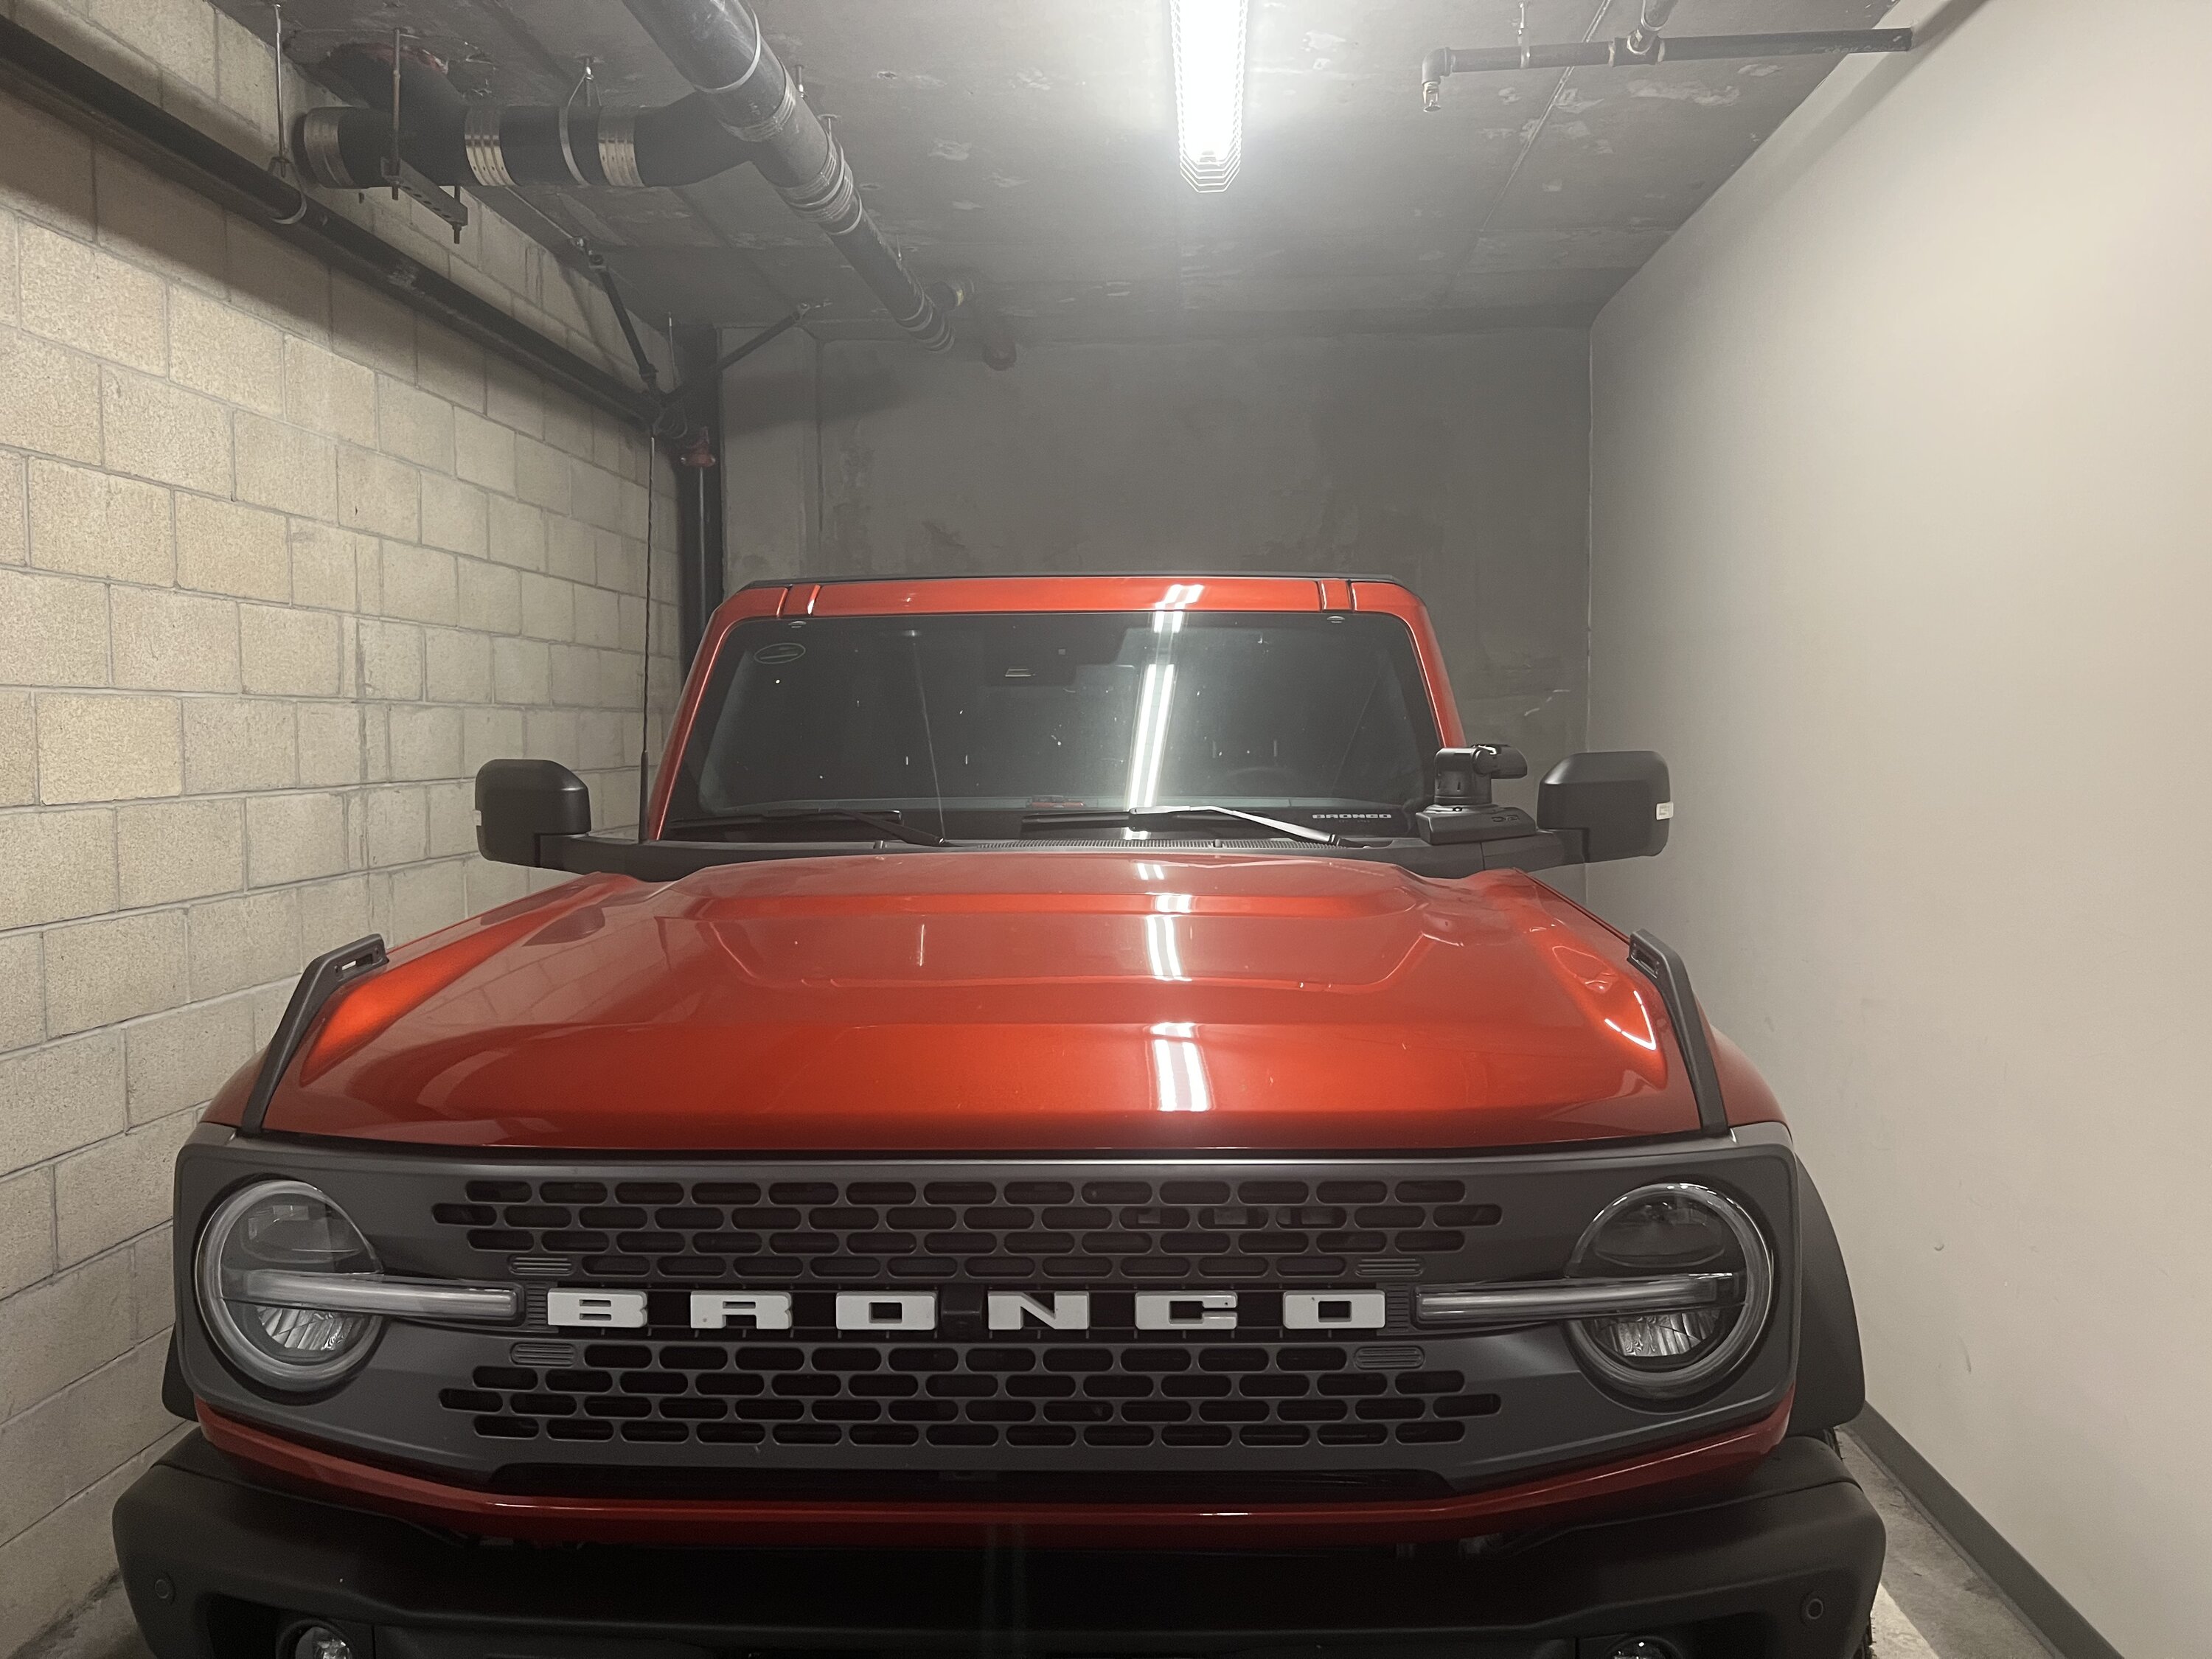 Ford Bronco "Red Bandit" 2 Door sas Badlands Build IMG_6252